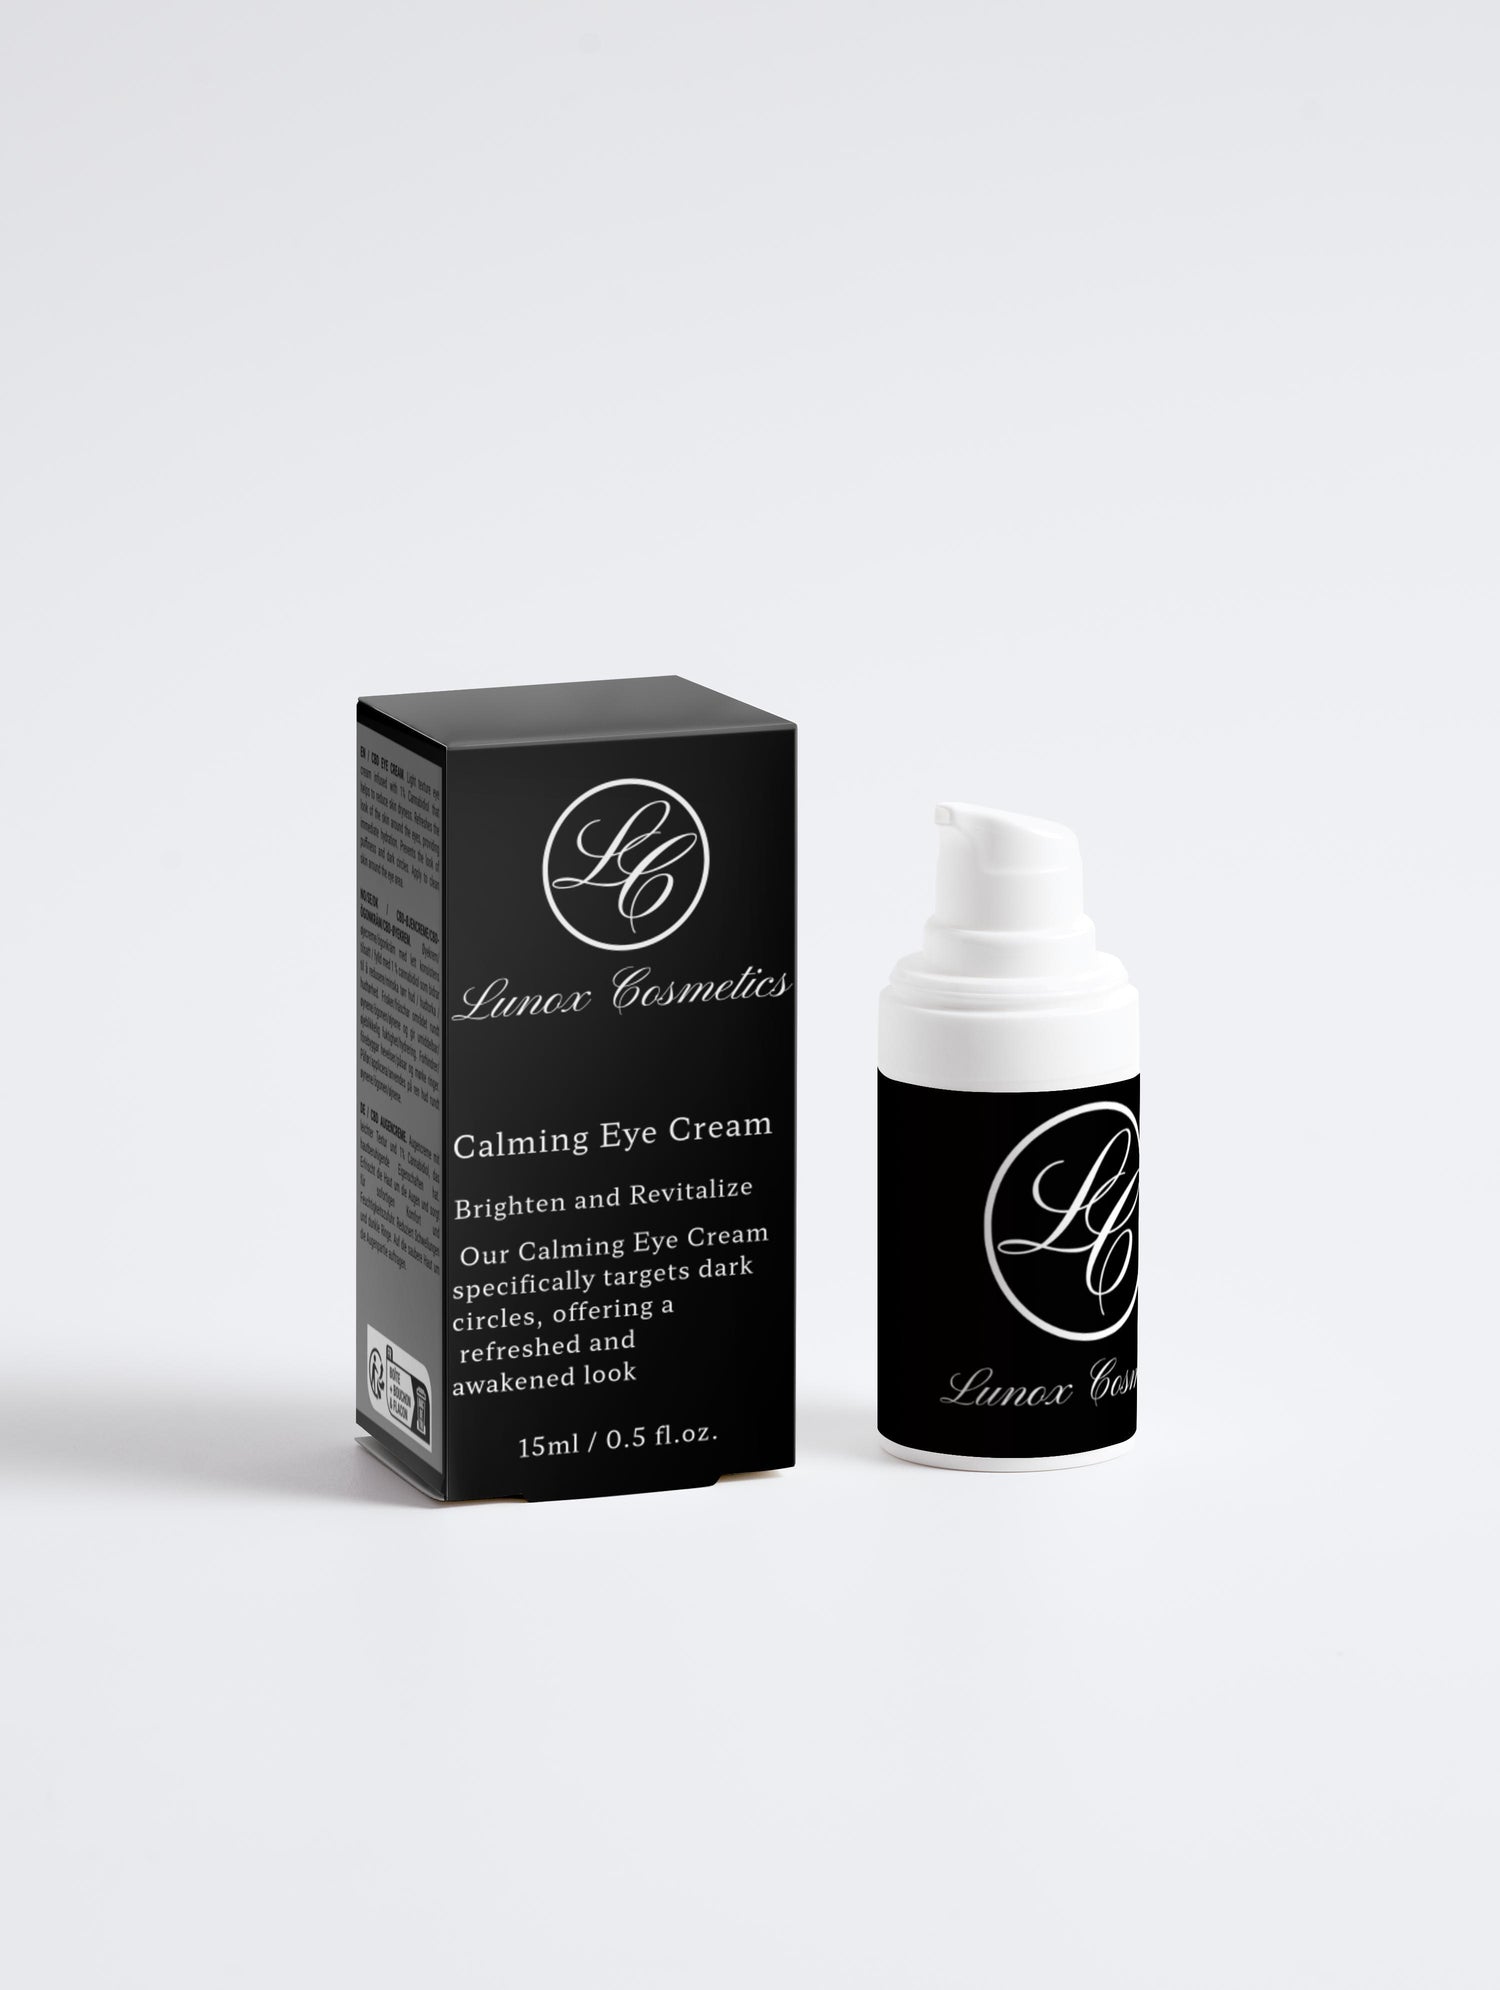 Lunox Cosmetics' Soothe & Refresh CBD-Infused Eye Cream